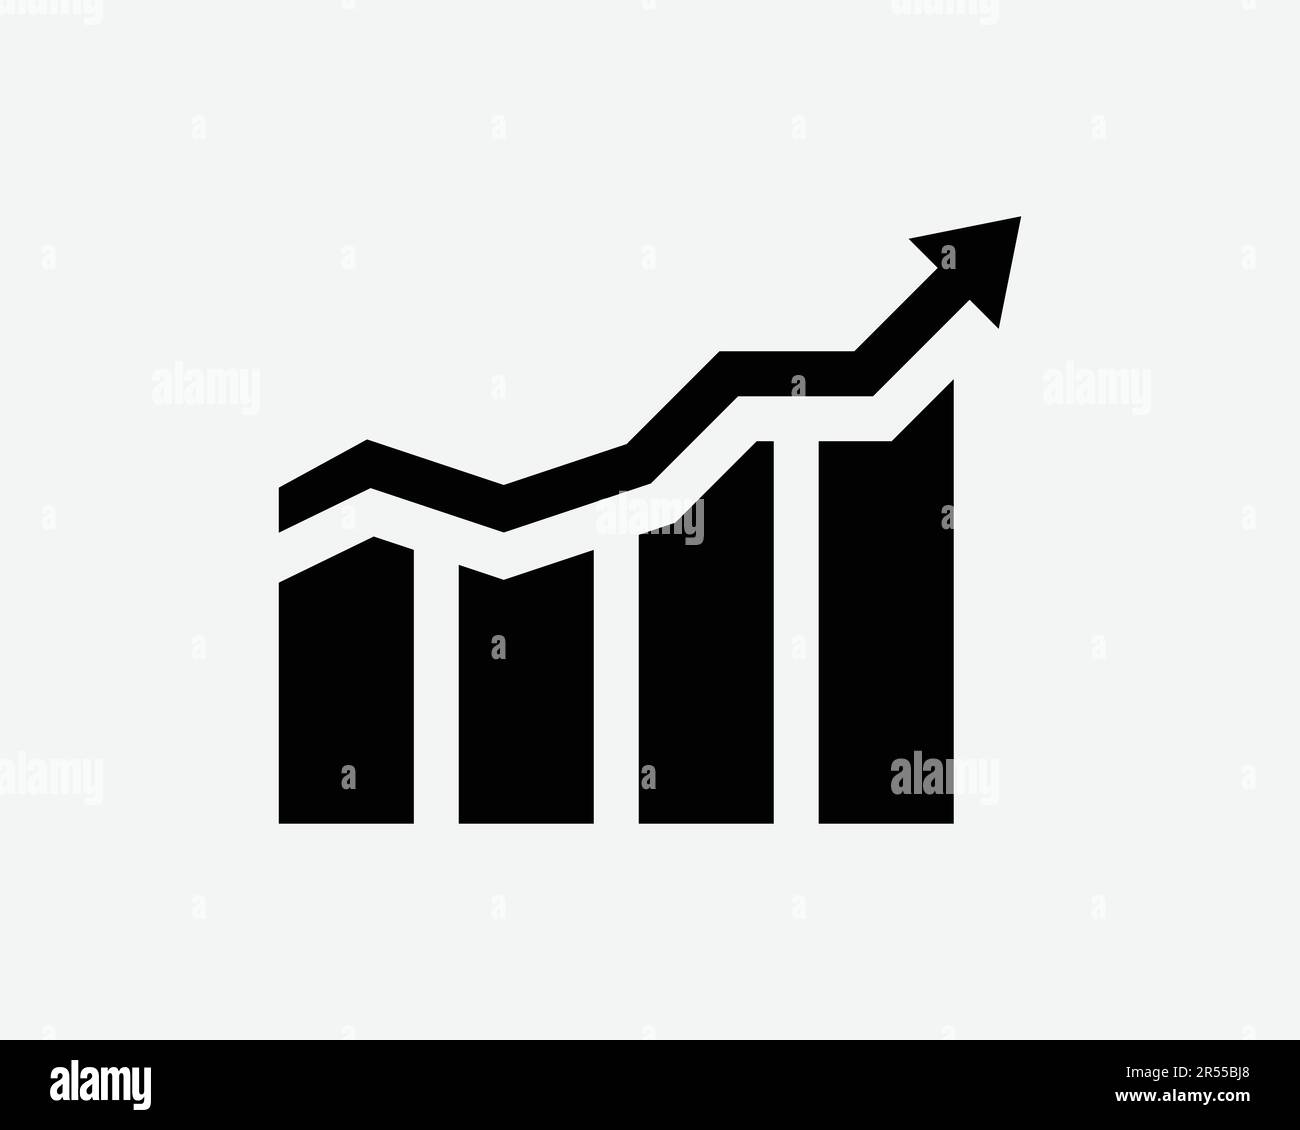 Bar Chart Growth Icon. Business Sales Profits Progress Finance Economy Market Rise Sign Symbol Black Artwork Graphic Illustration Clipart EPS Vector Stock Vector